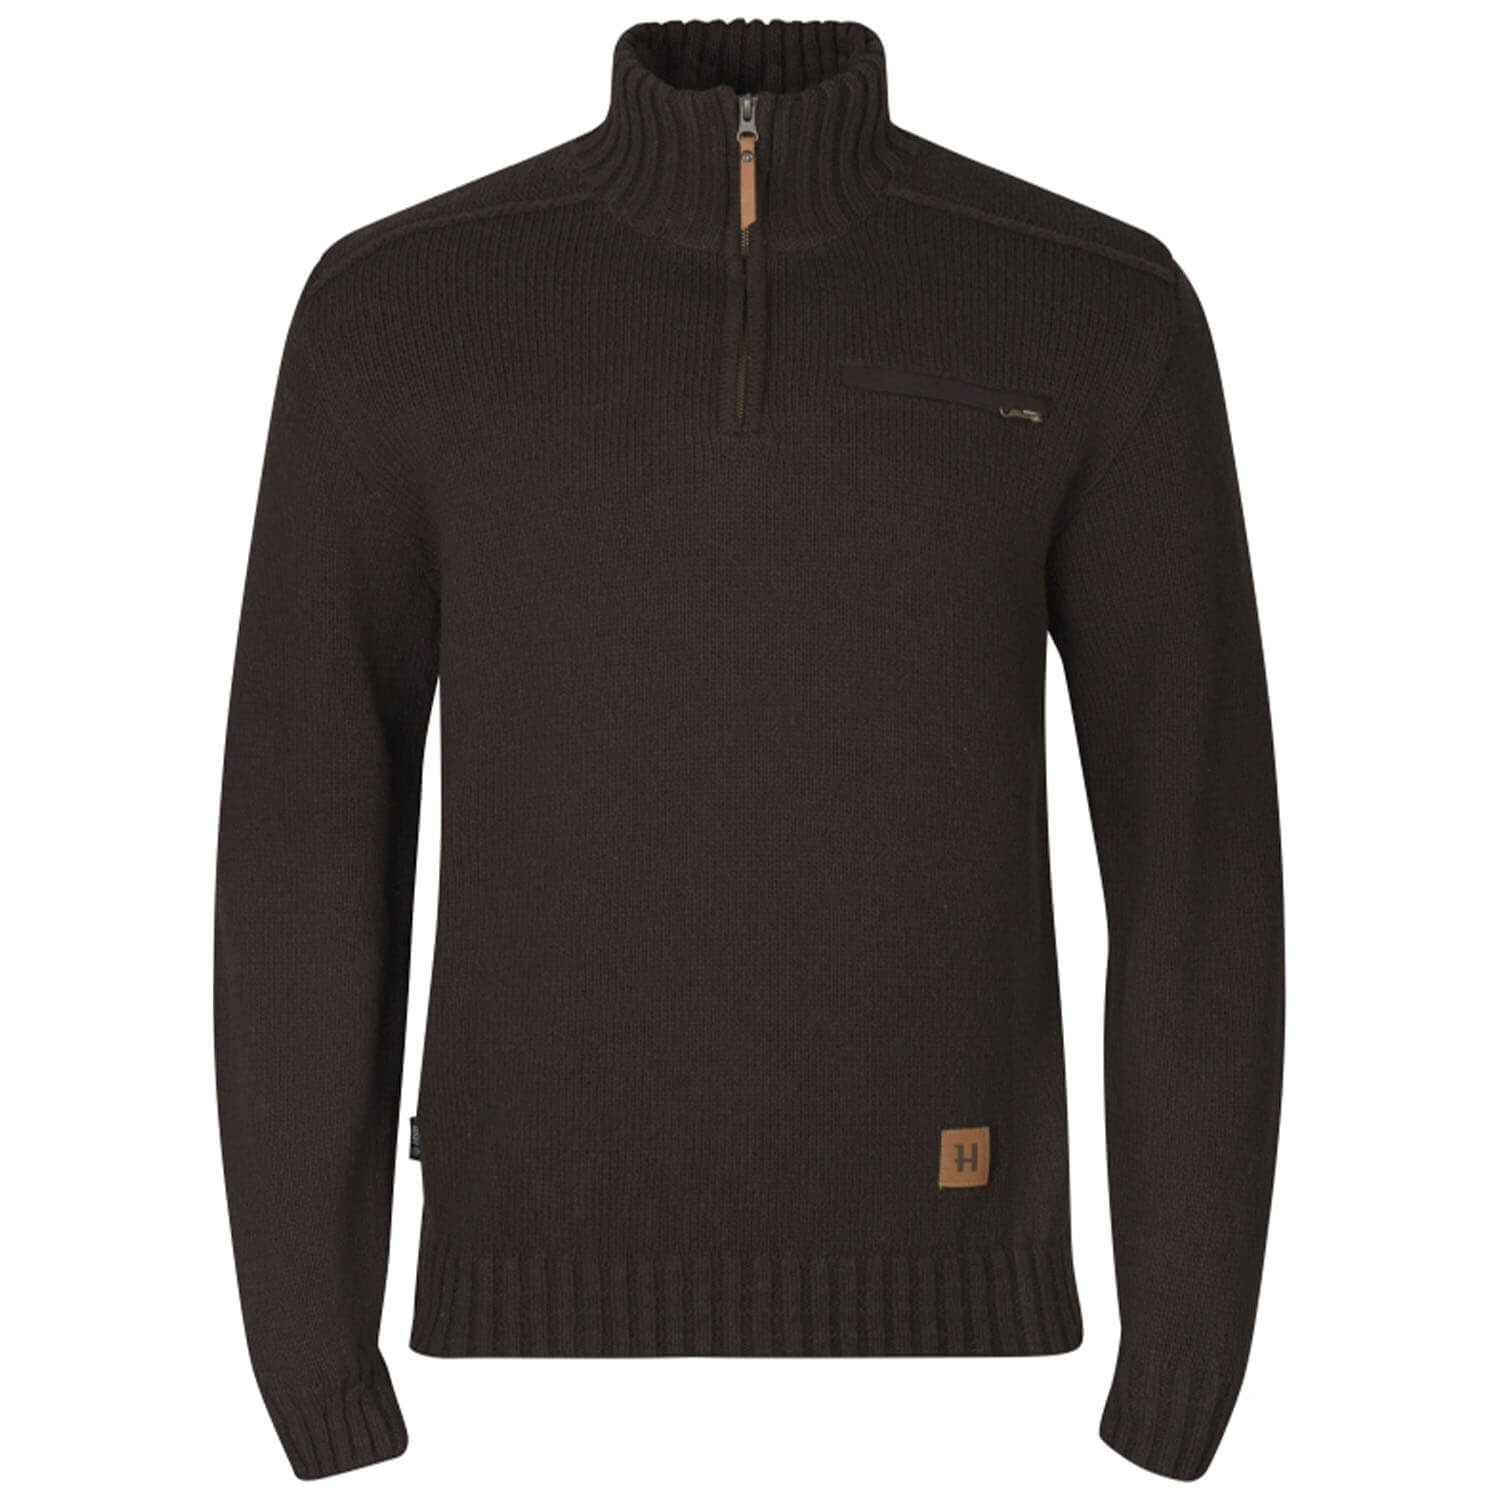 Härkila sweater annaboda 2.0 HSP (demitasse brown) - Winter Hunting Clothing